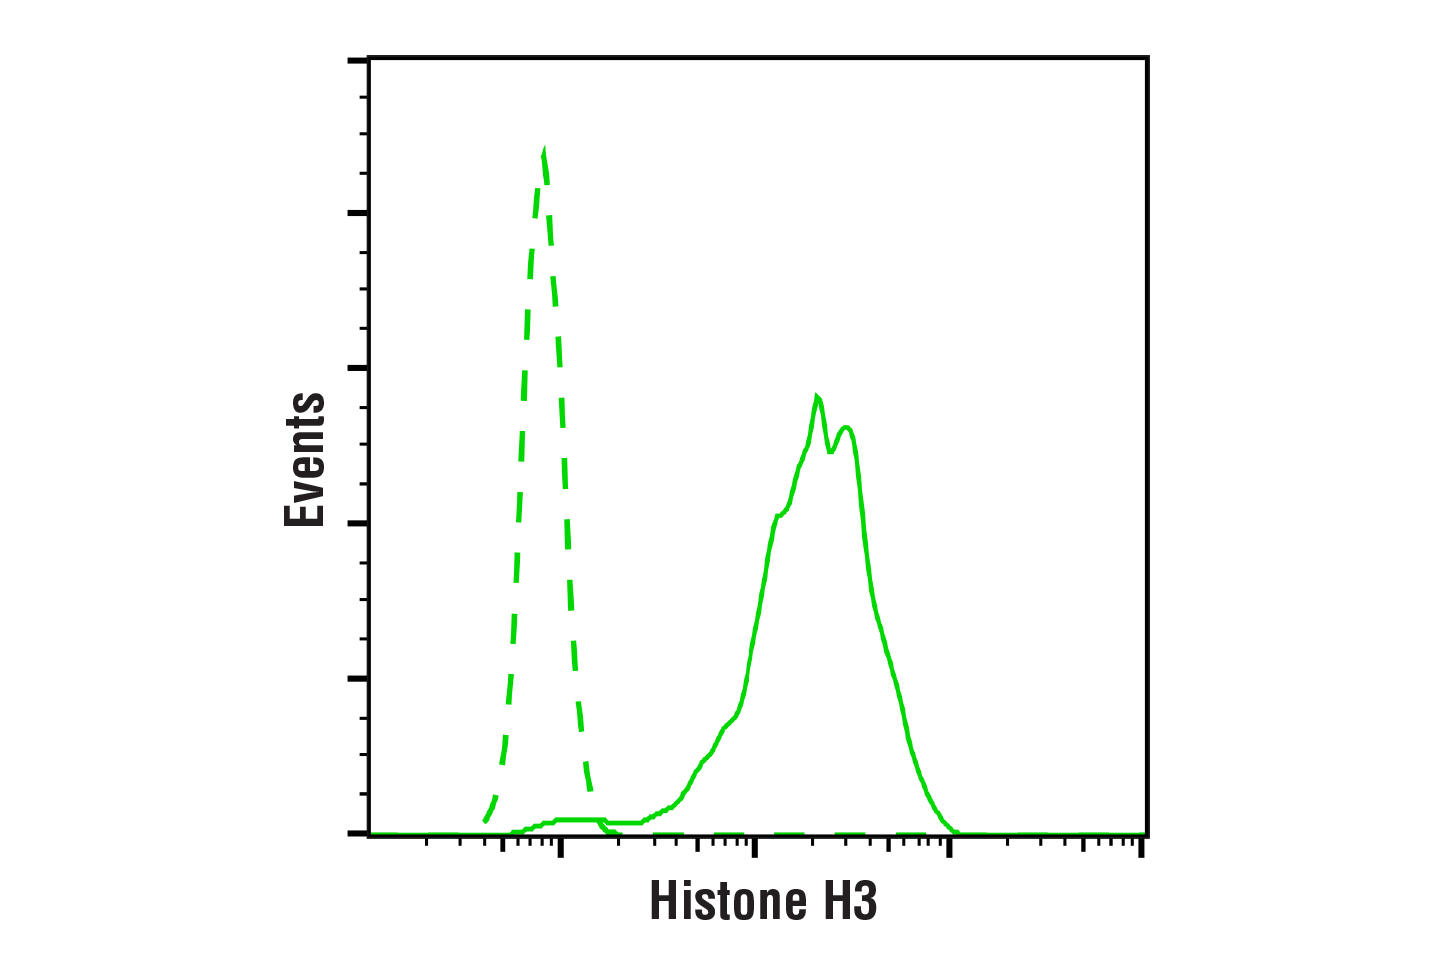 Acetyl-Histone H3 Antibody Sampler Kit